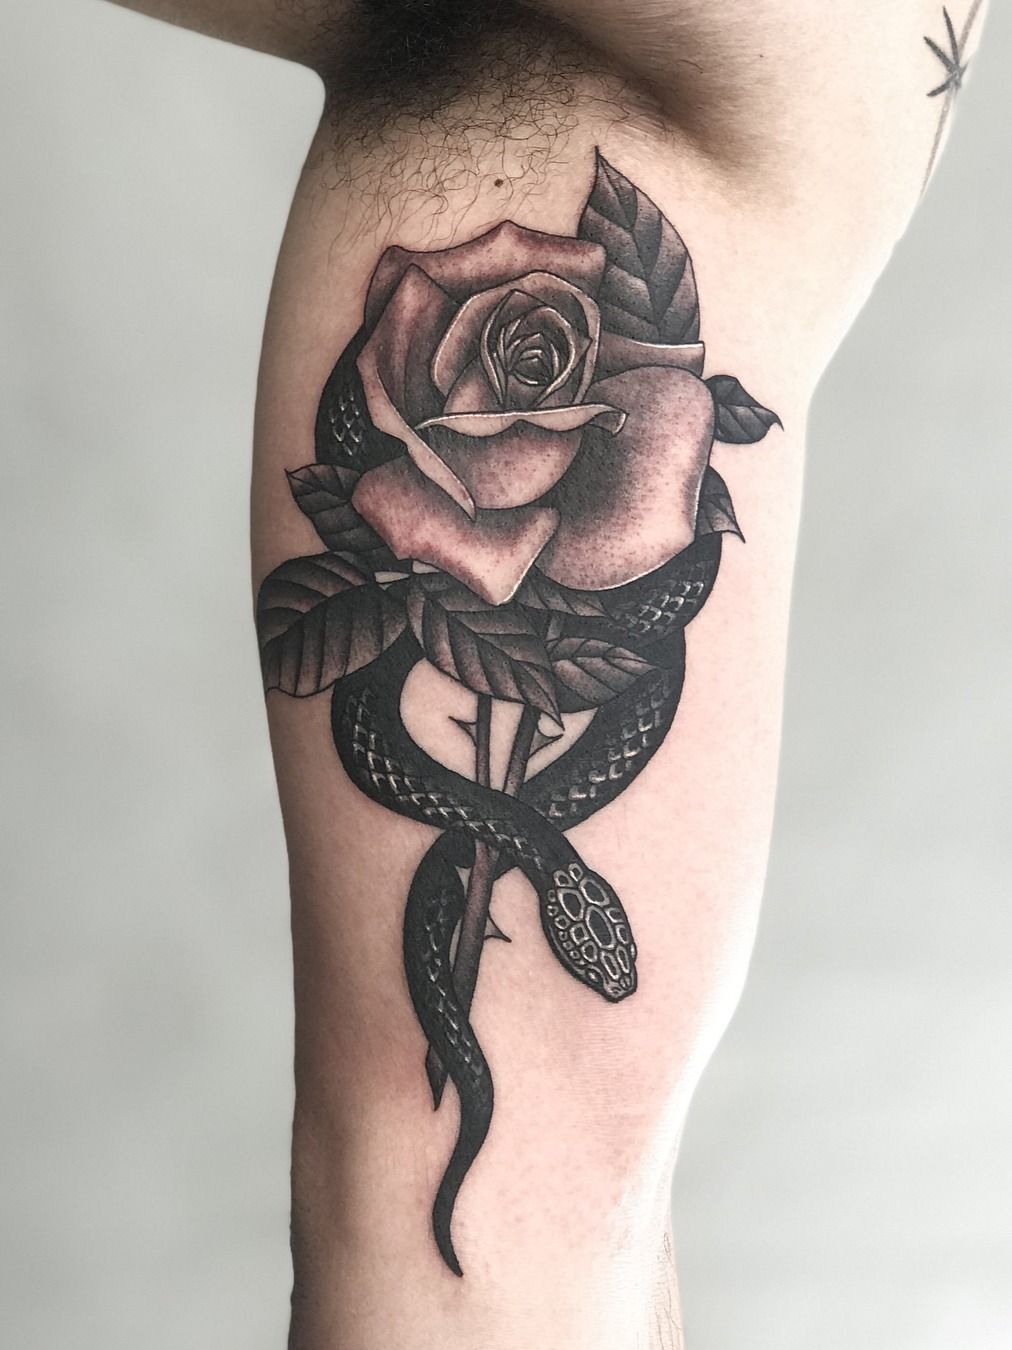 GlavportalNet on X Beautiful Realistic Rose Thigh Tattoo Ideas for Women   ideas realistas del tatu  tattoos  Beautiful del Ideas realistas  Realistic httpstcoIPXEiPJGId httpstco5qoRMxIRy2  X